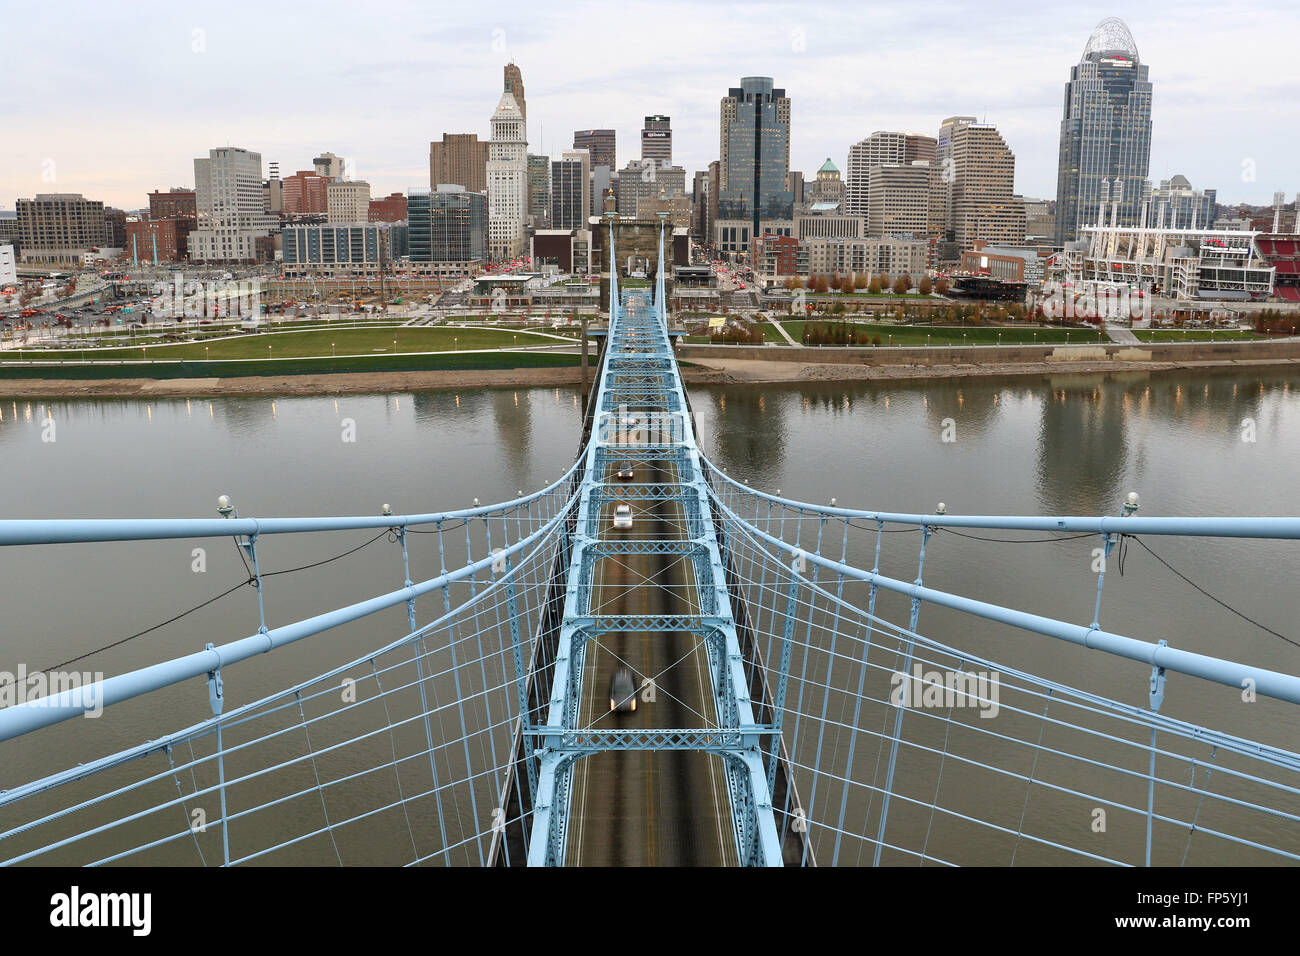 FC Cincinnati's 'River Kit' jersey pays homage to Ohio River, Roebling  Suspension Bridge